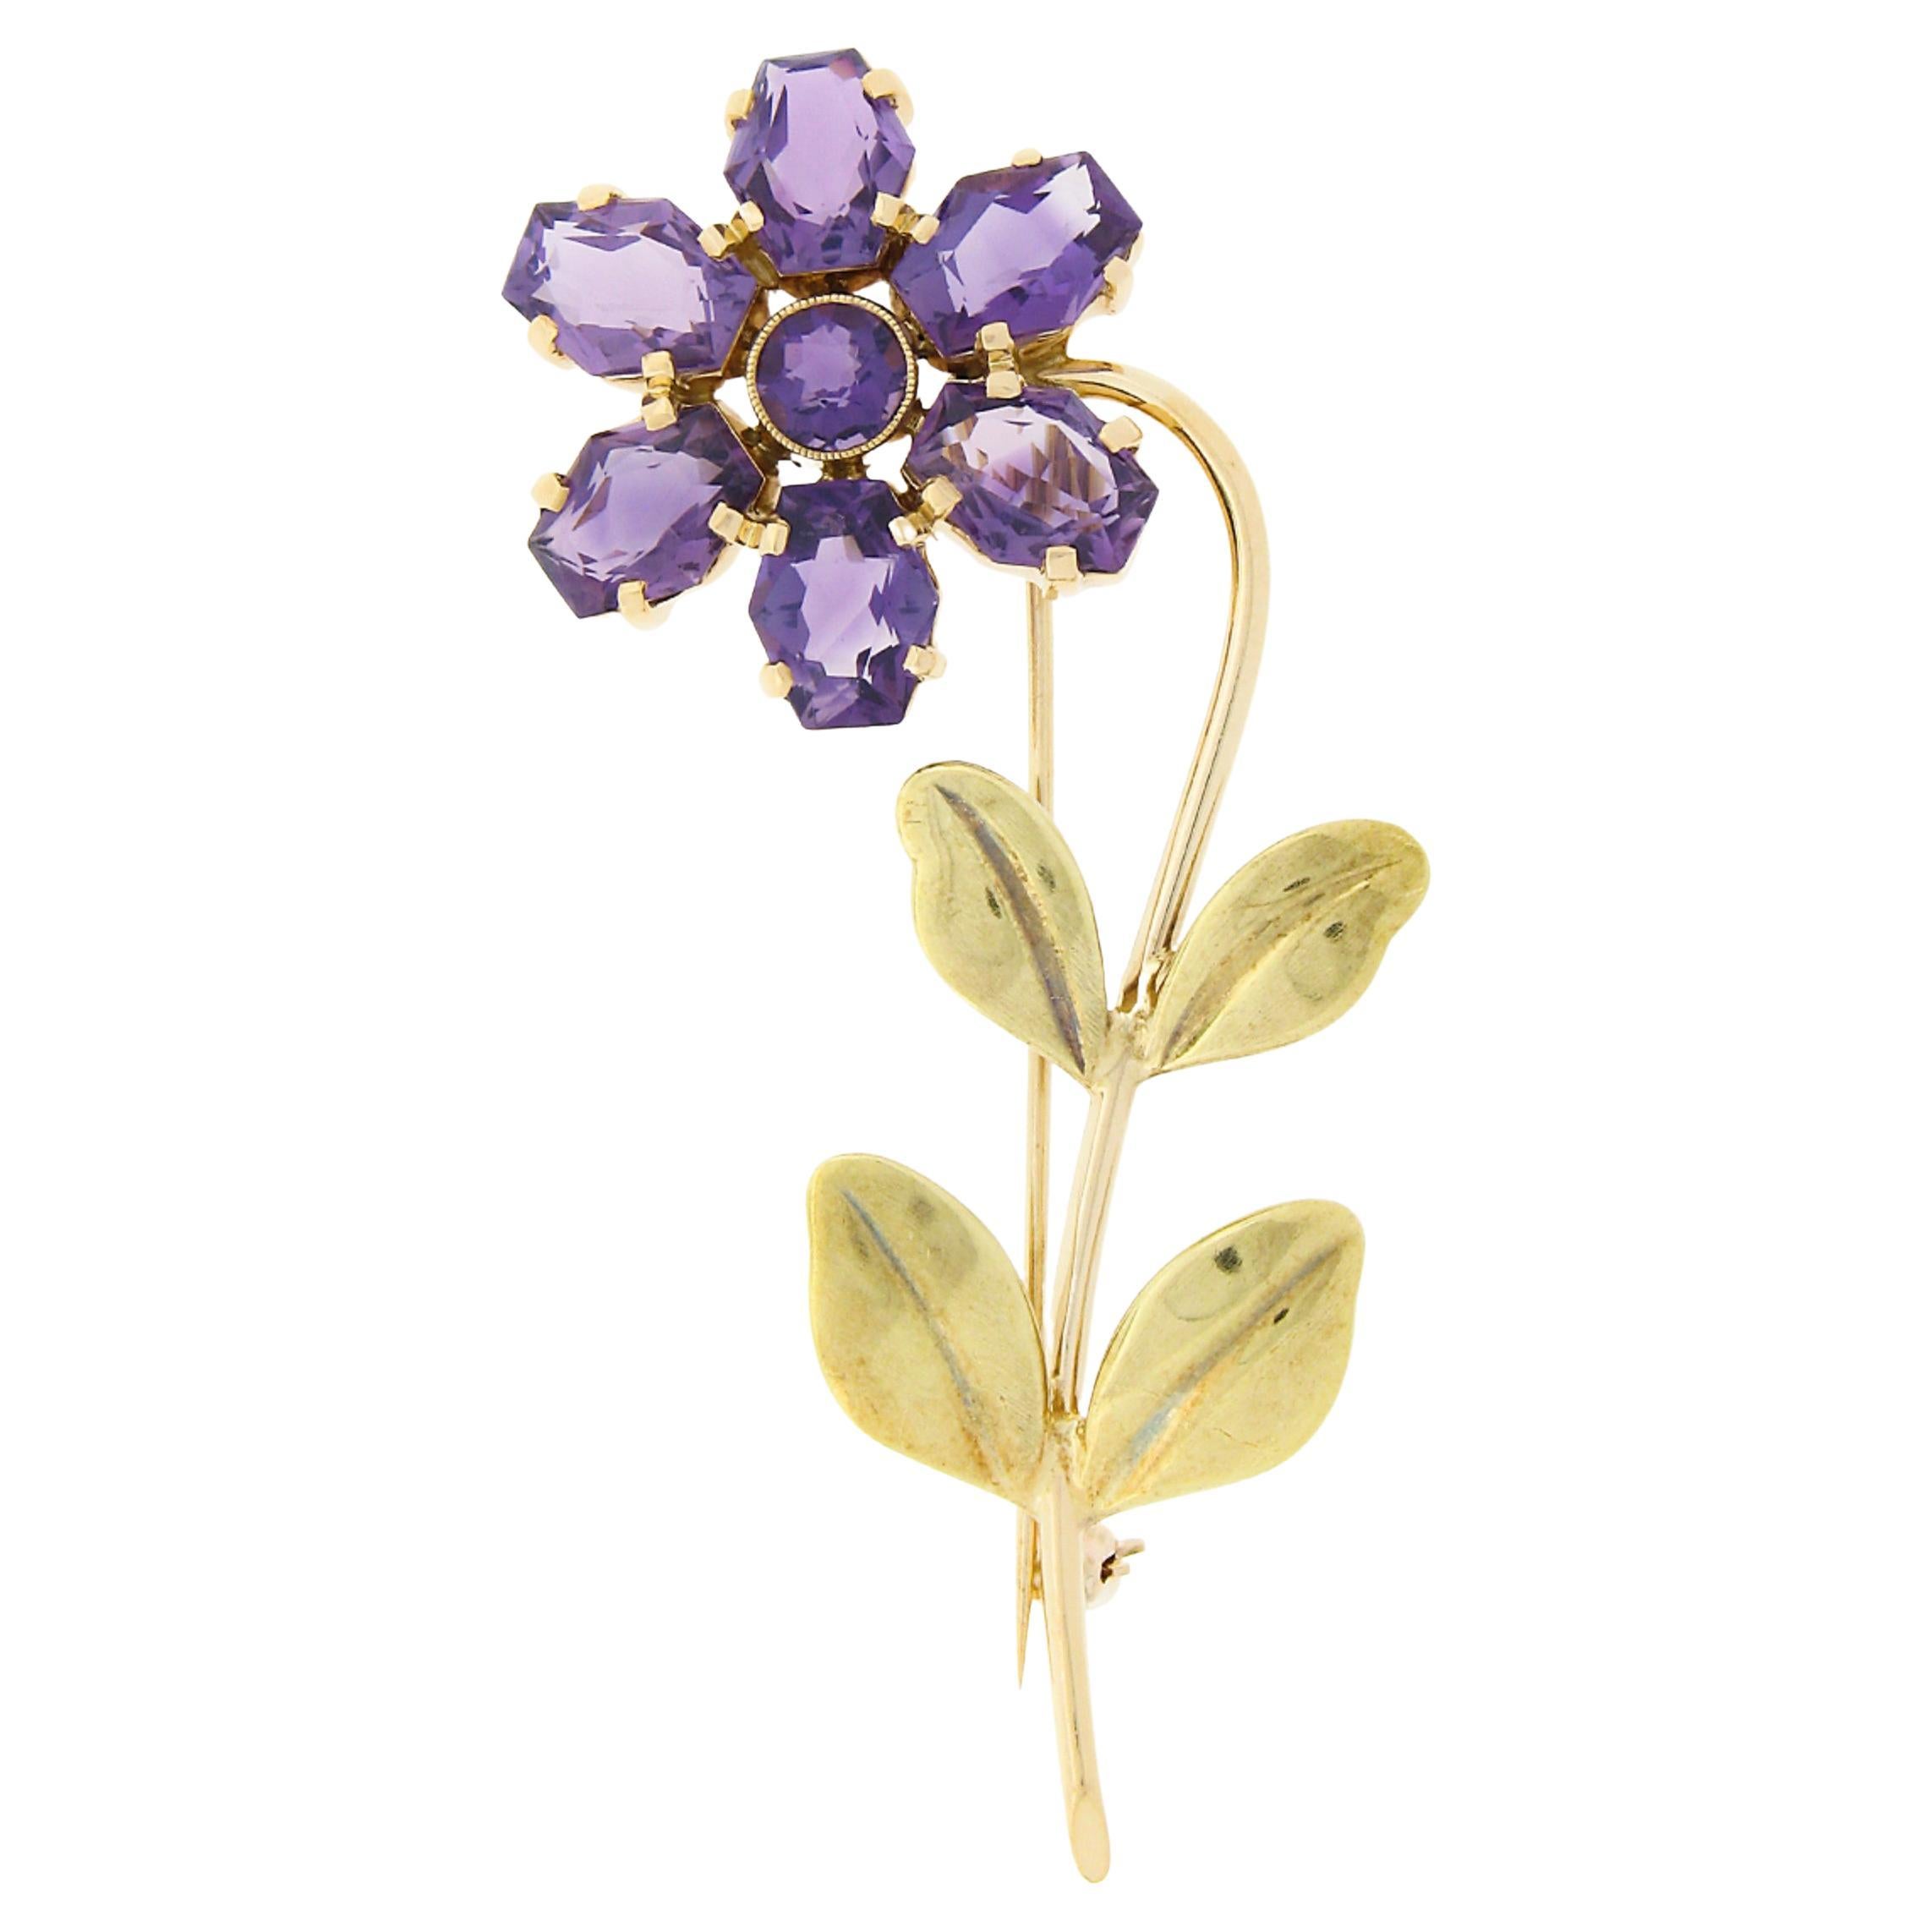 Wordley, Allsopp & Bliss 14k Two Tone Gold 10.55ctw Amethyst Flower Brooch Pin